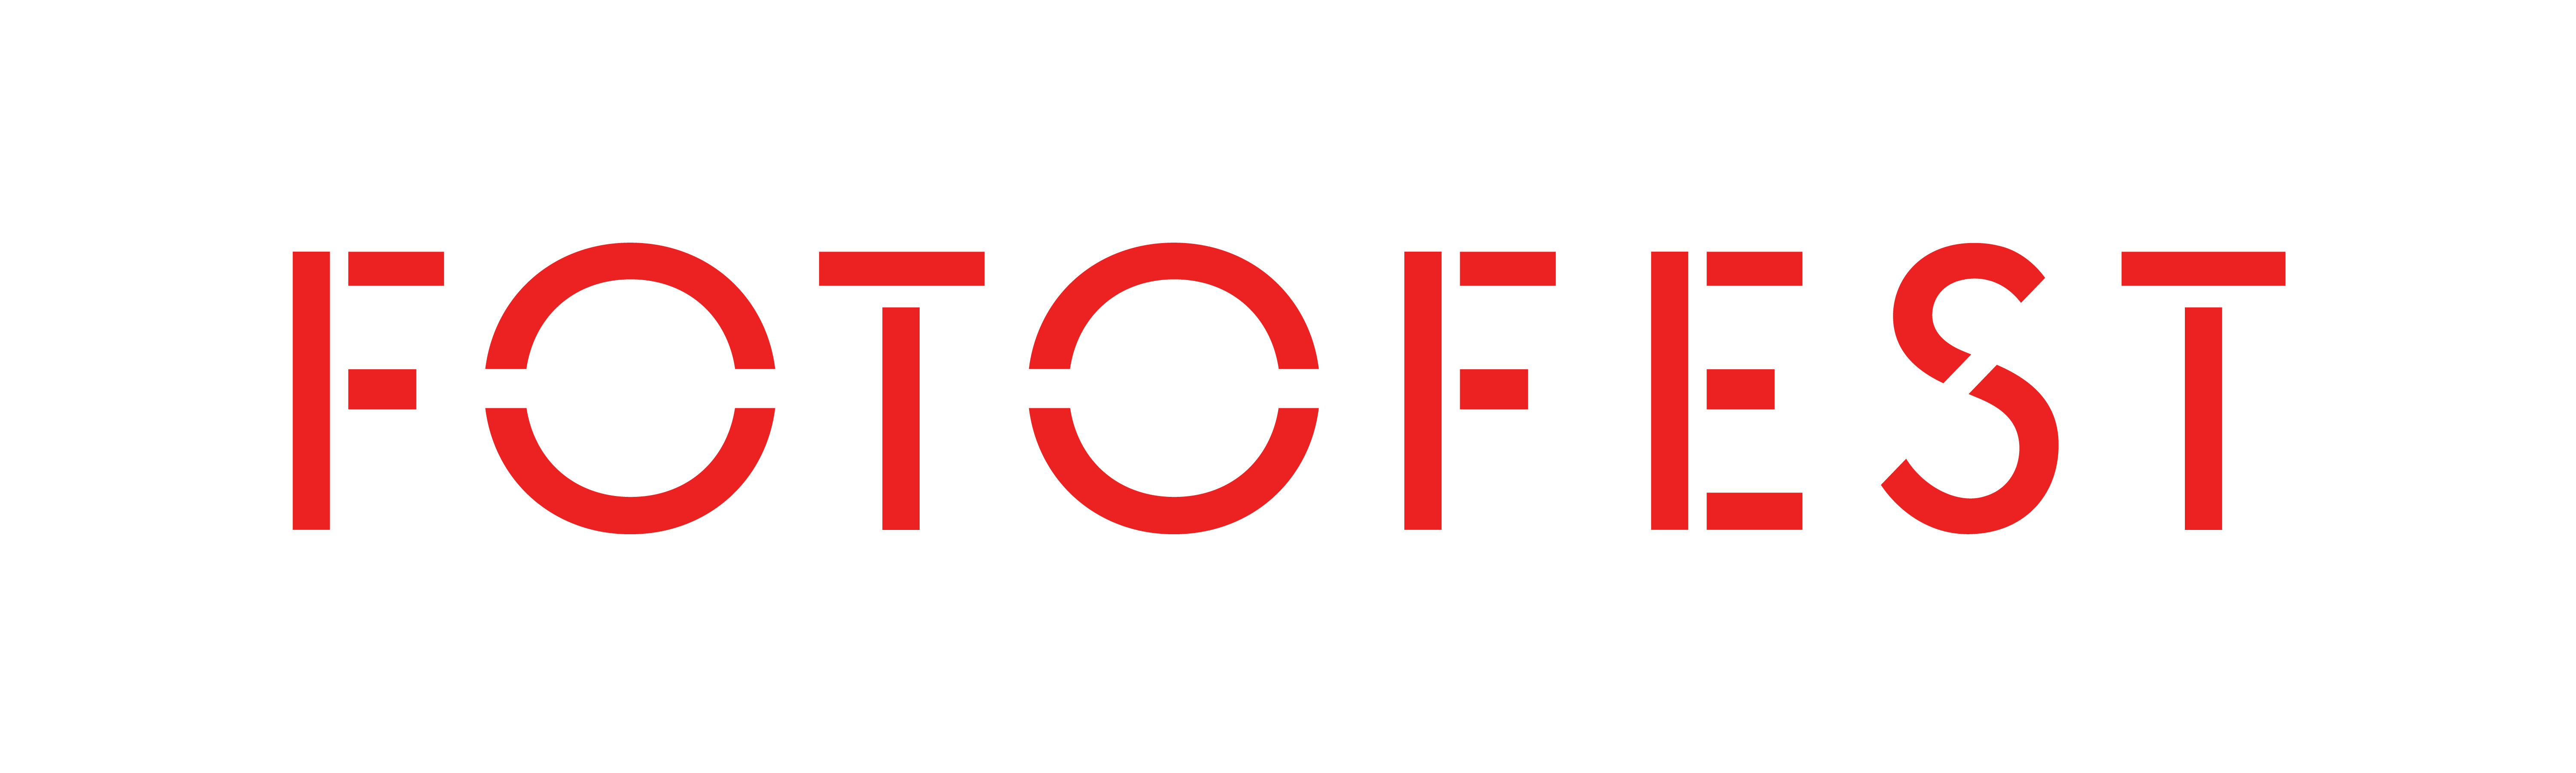 ff_logotype2019_red.jpg